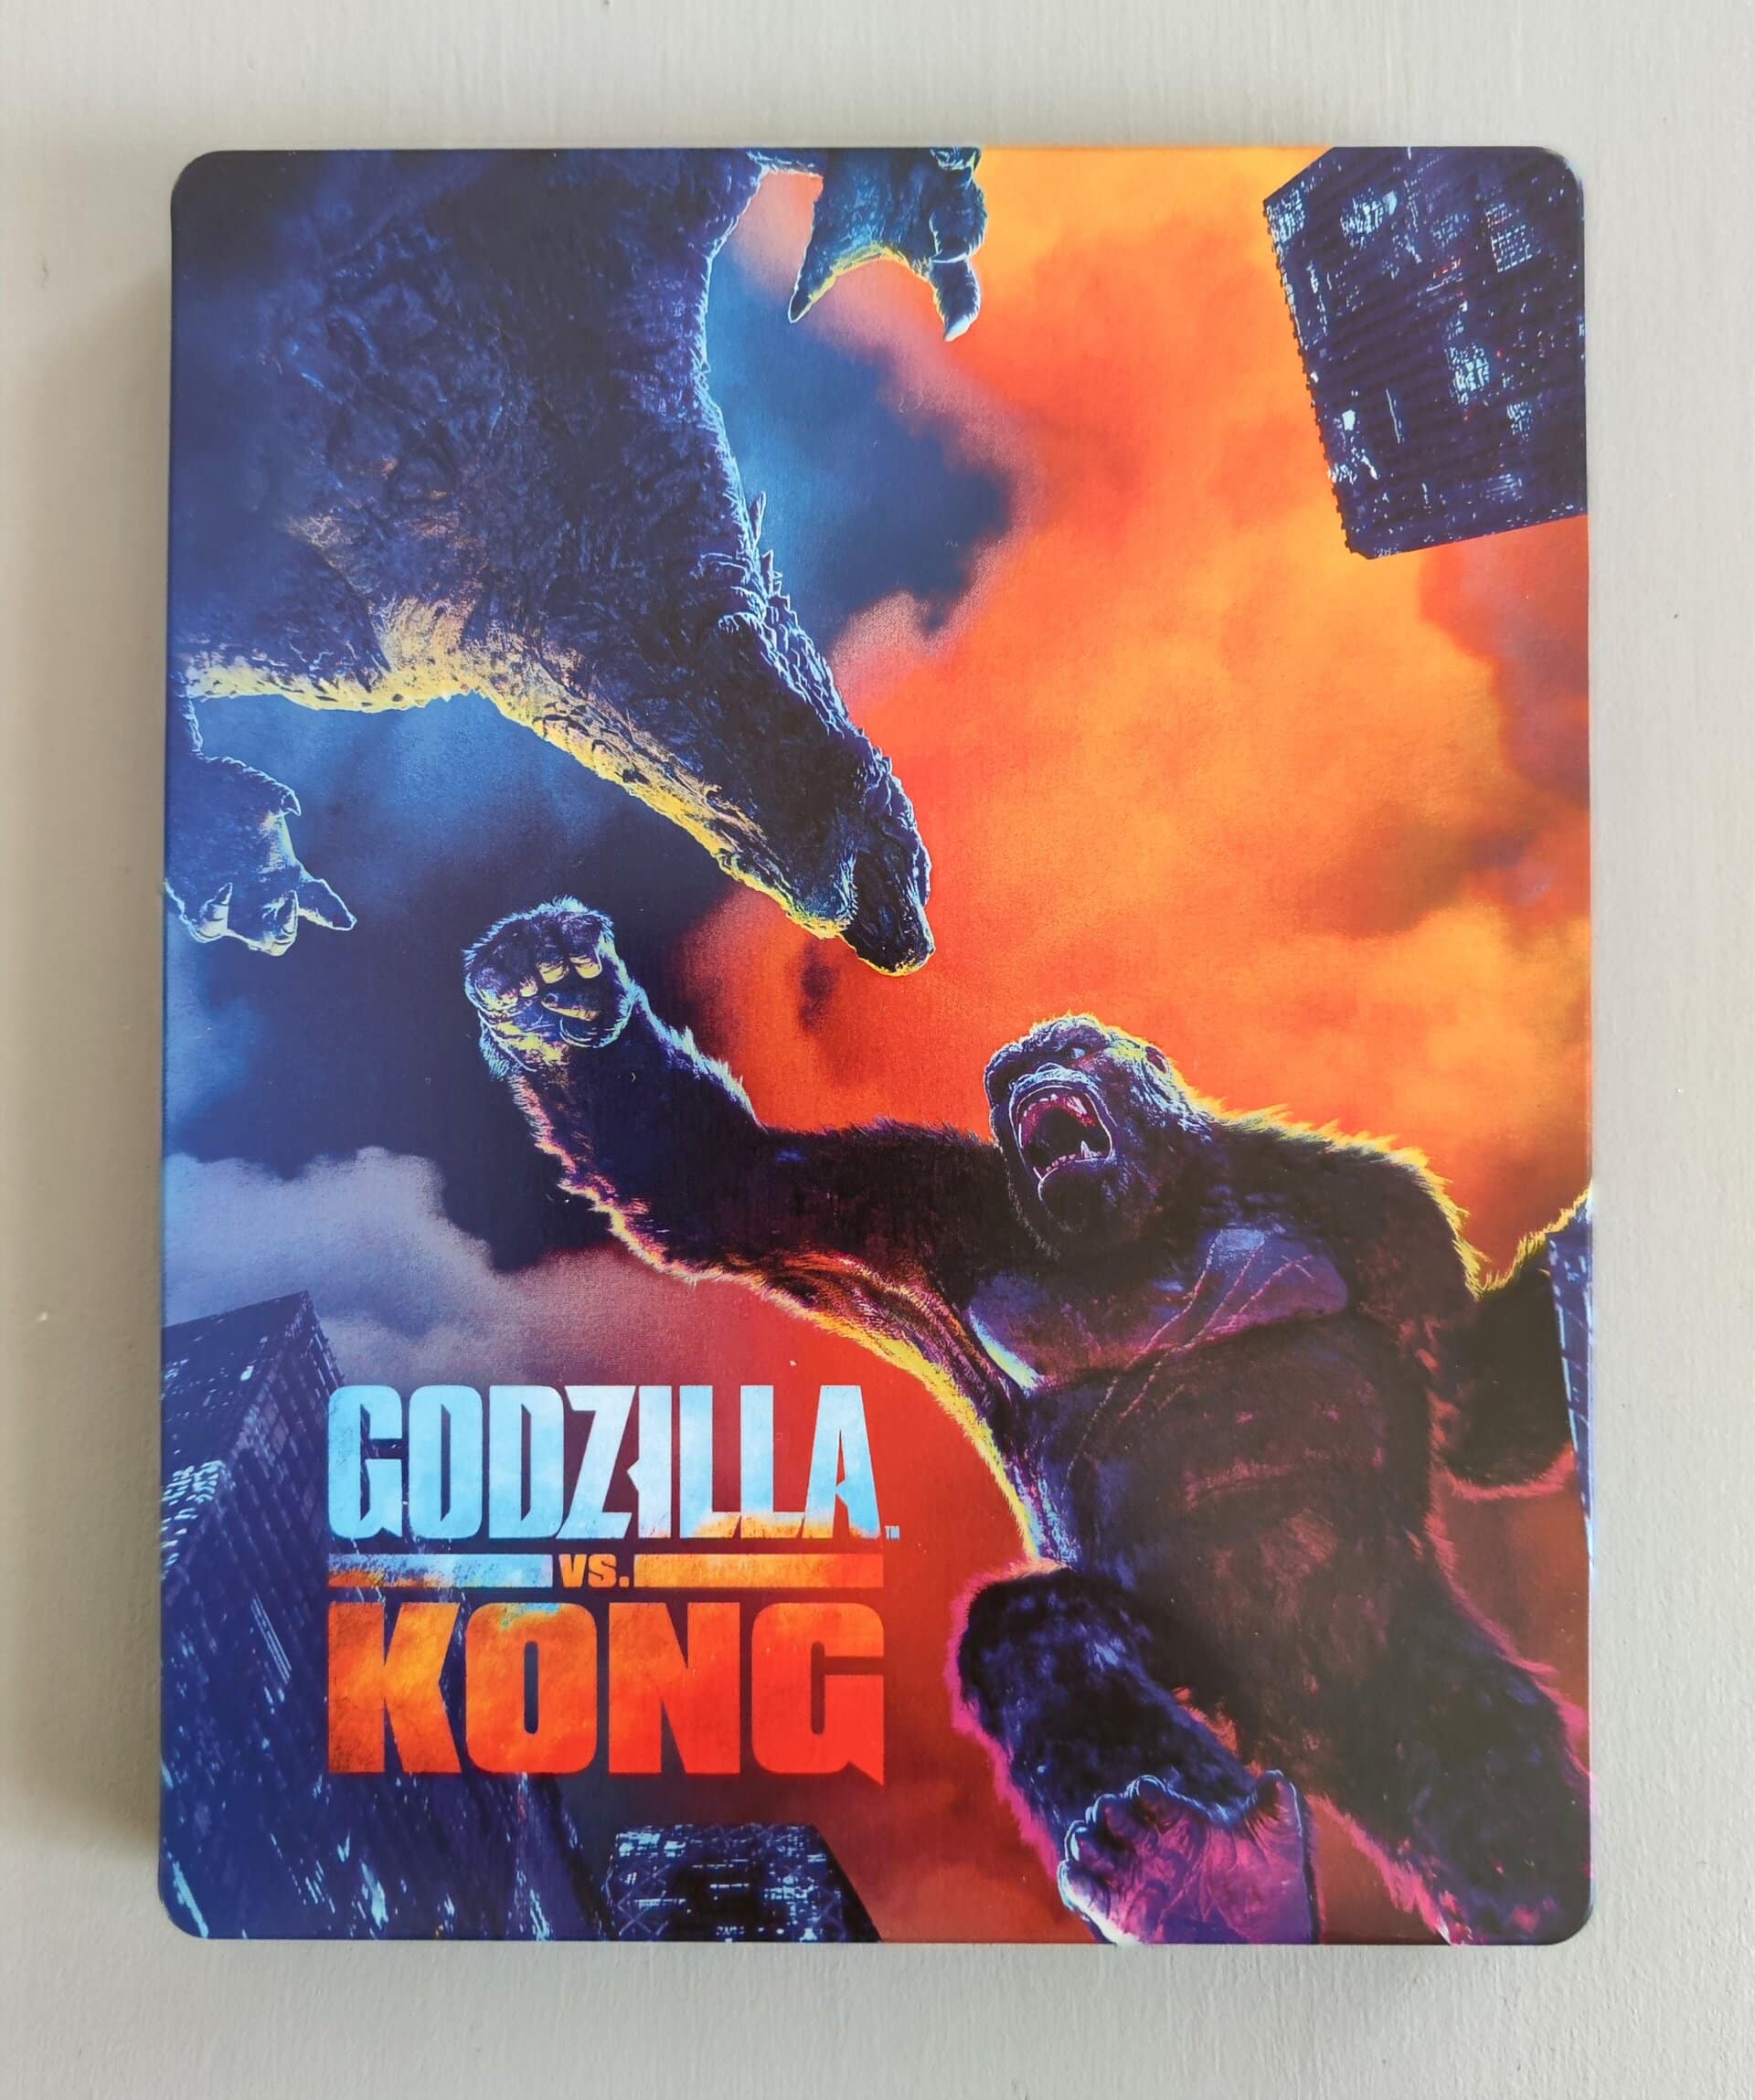 [Review] Godzilla VS Kong 4K UHD Steelbook (inkl. Blu-Ray)